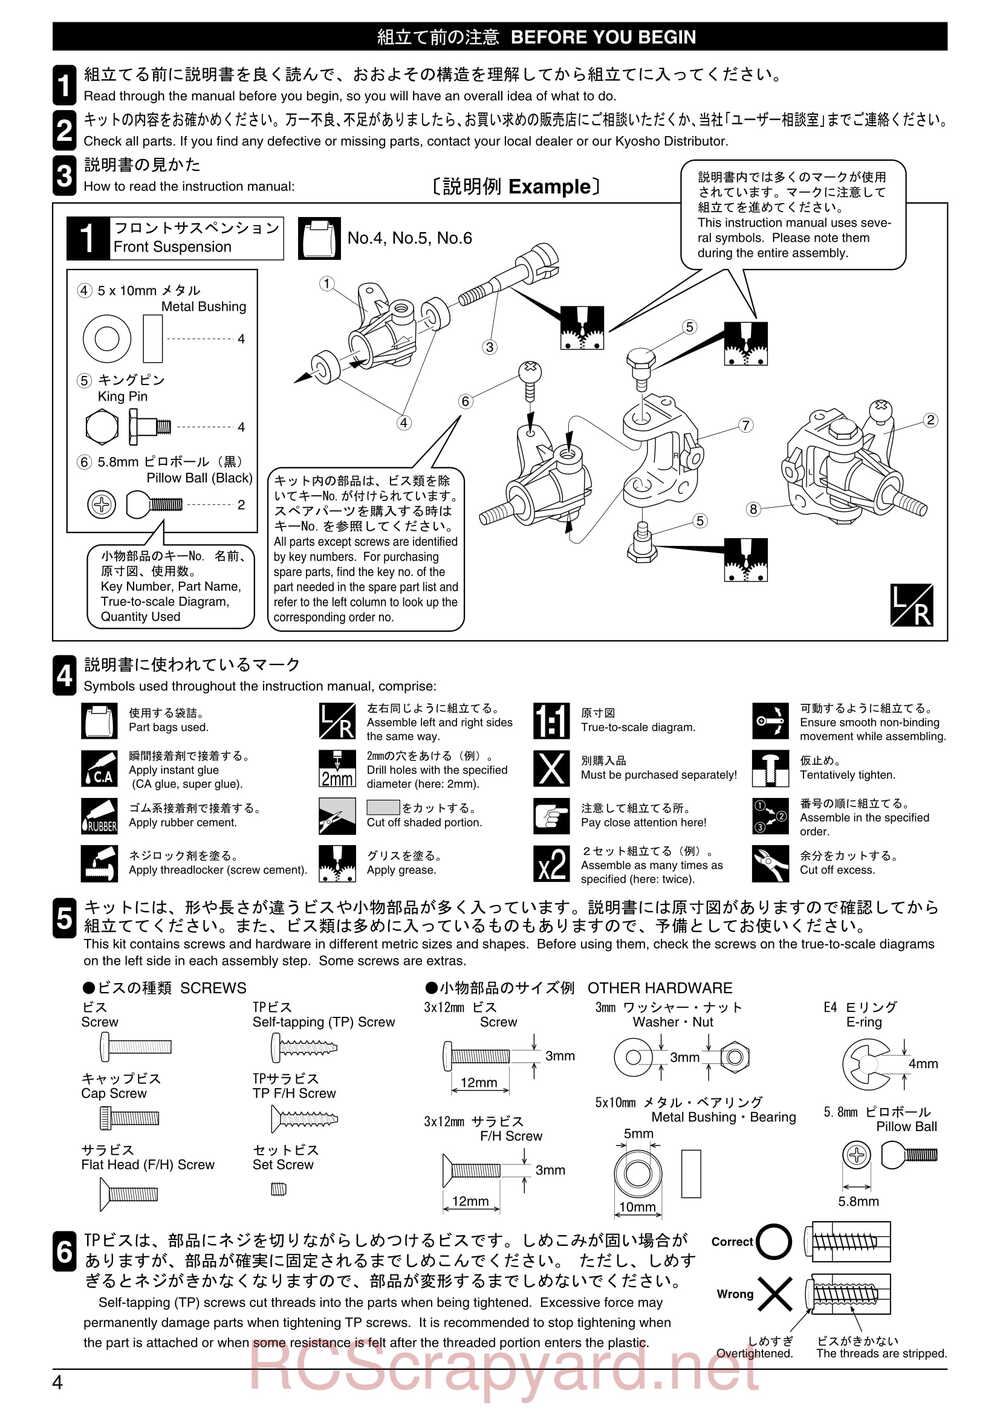 Kyosho - 31256 - V-One RRR - Manual - Page 04